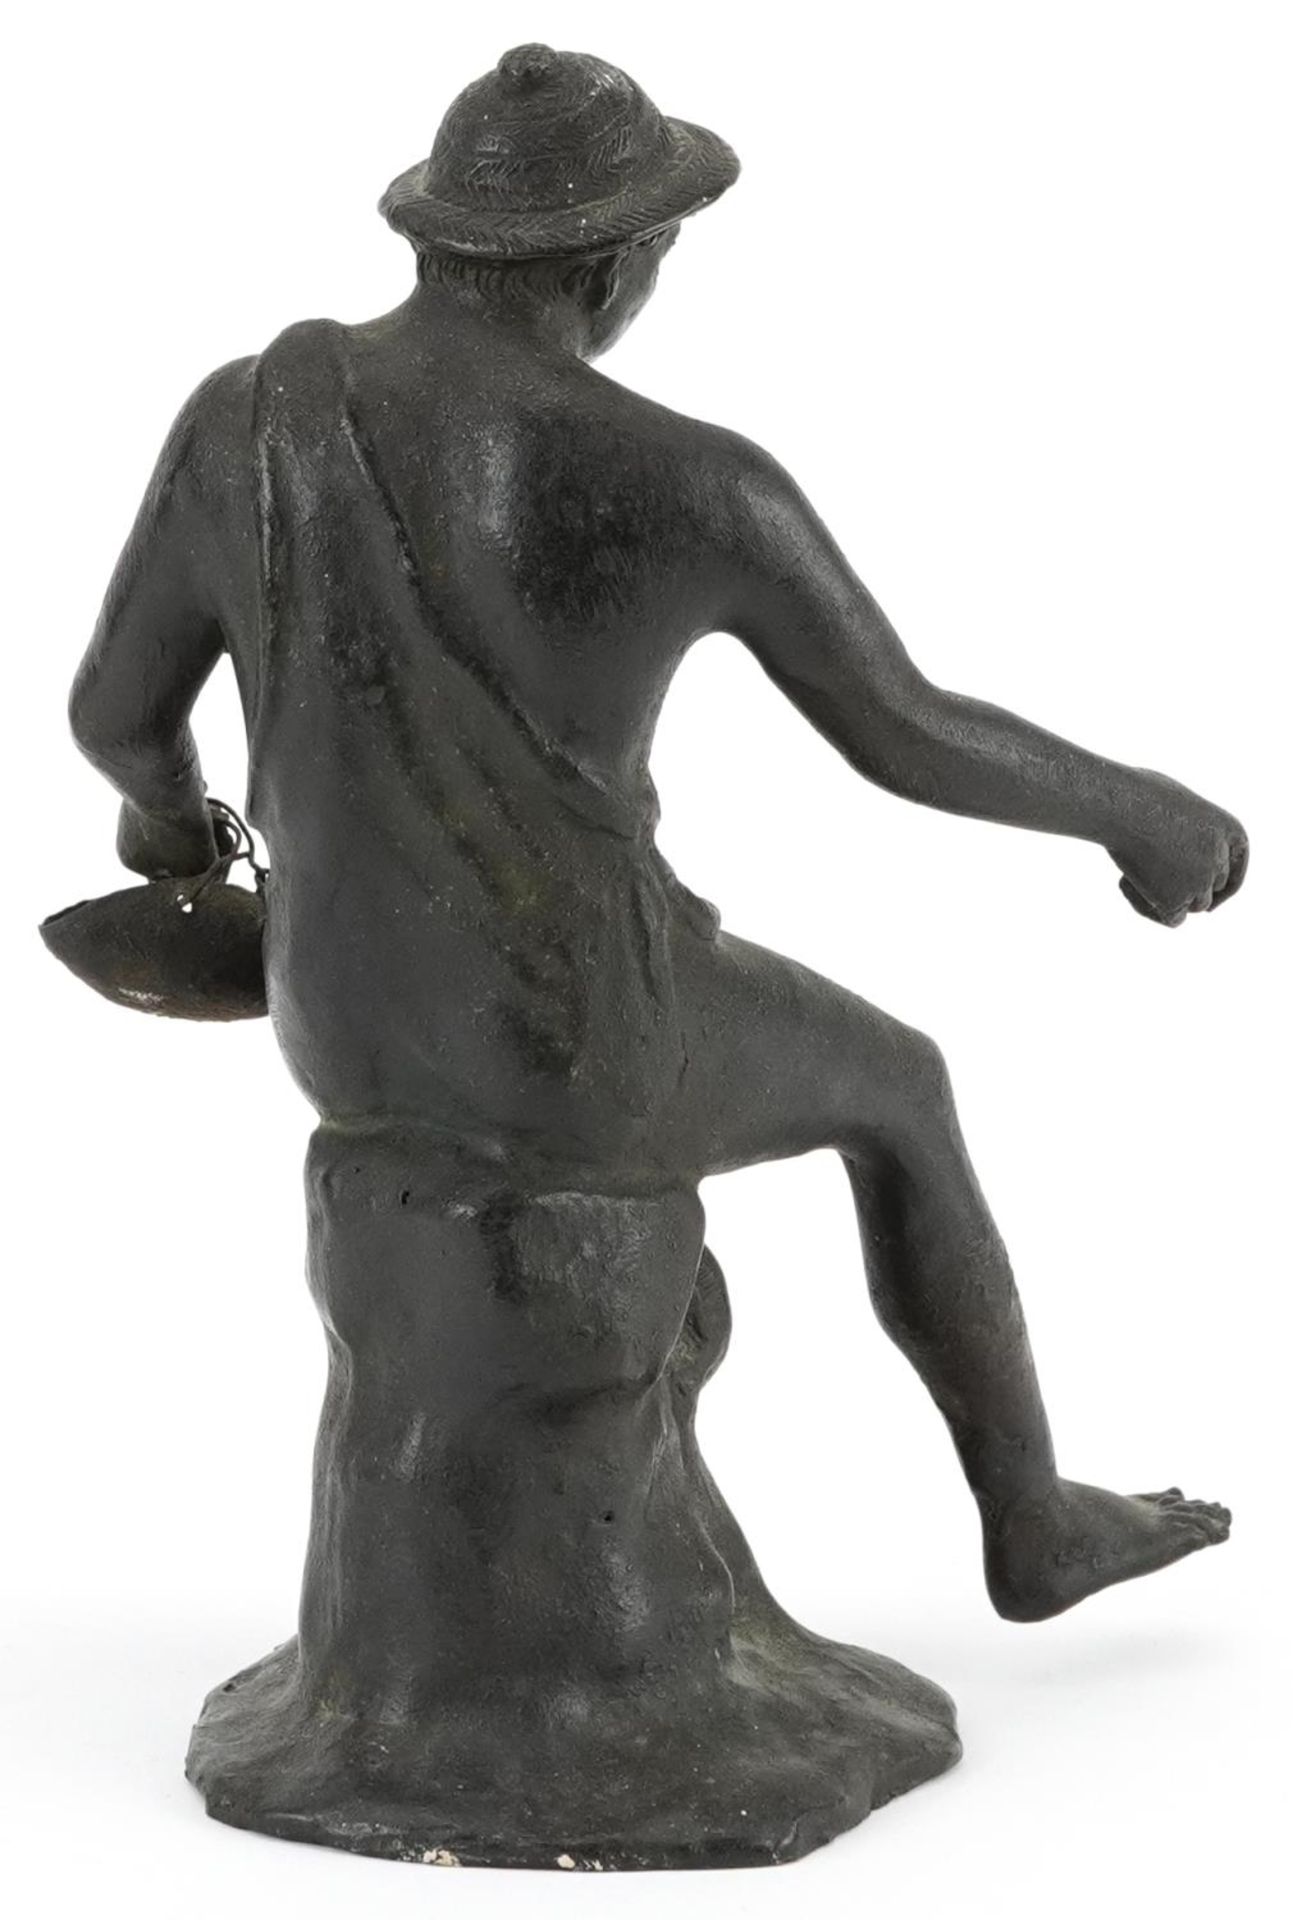 Antique Grand Tour verdigris patinated bronze statue of a Neapolitan fisherman, 20cm high - Image 2 of 3